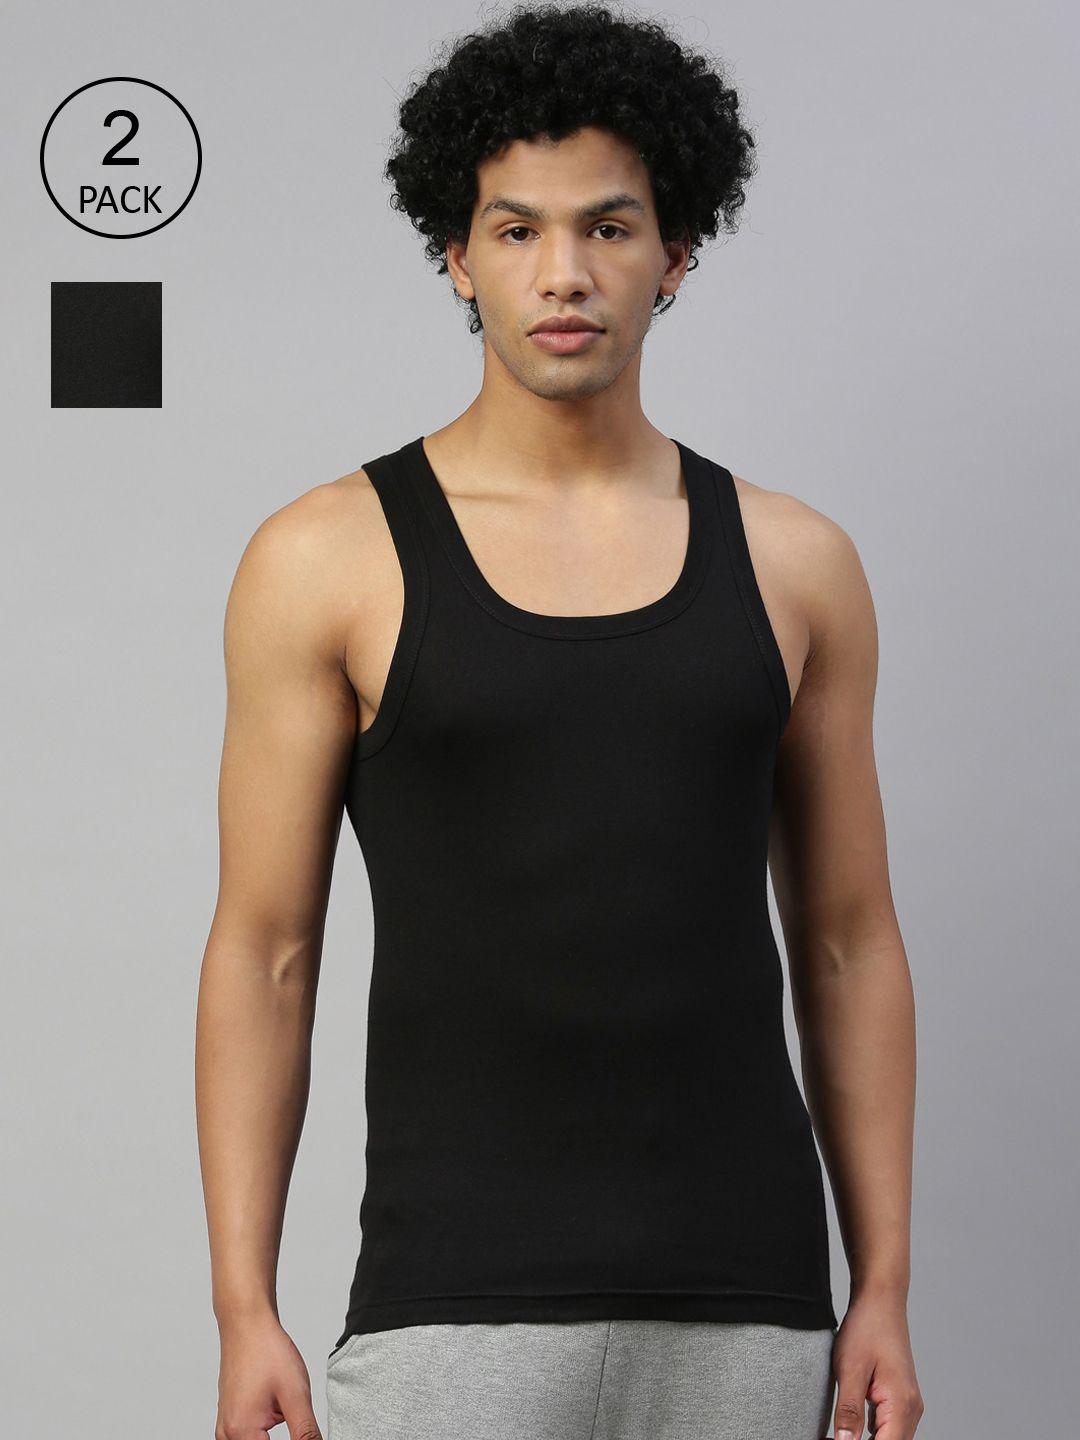 dixcy scott maximus men pack of 2 black pure cotton innerwear vests